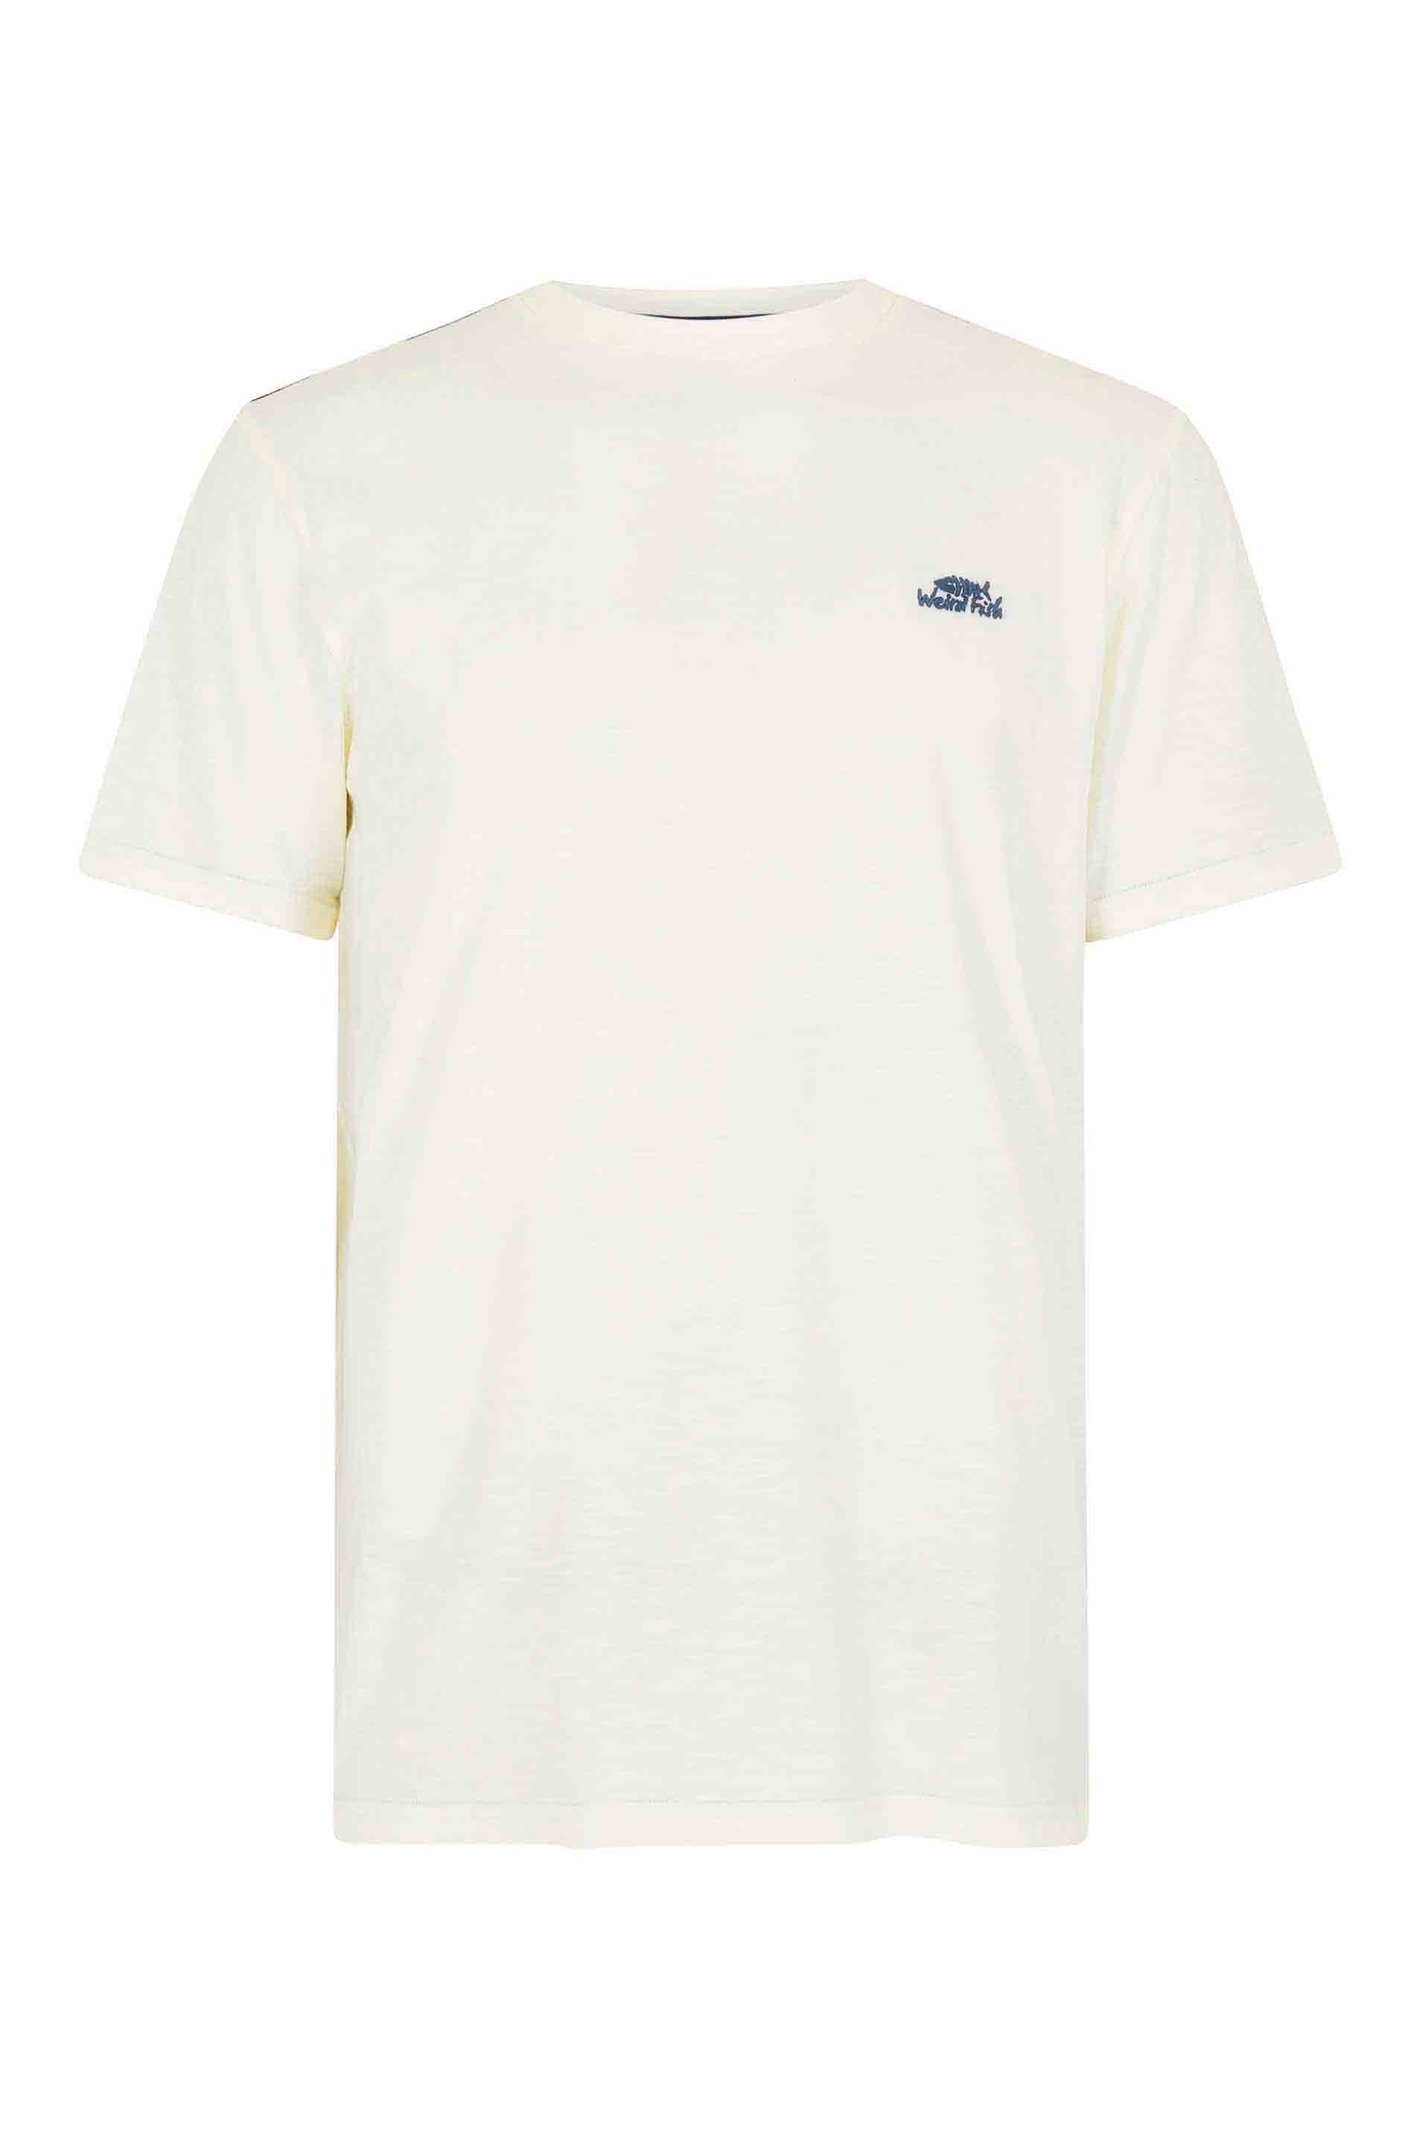 Weird Fish Fished Organic Cotton T-Shirt Dusty White Size 3XL